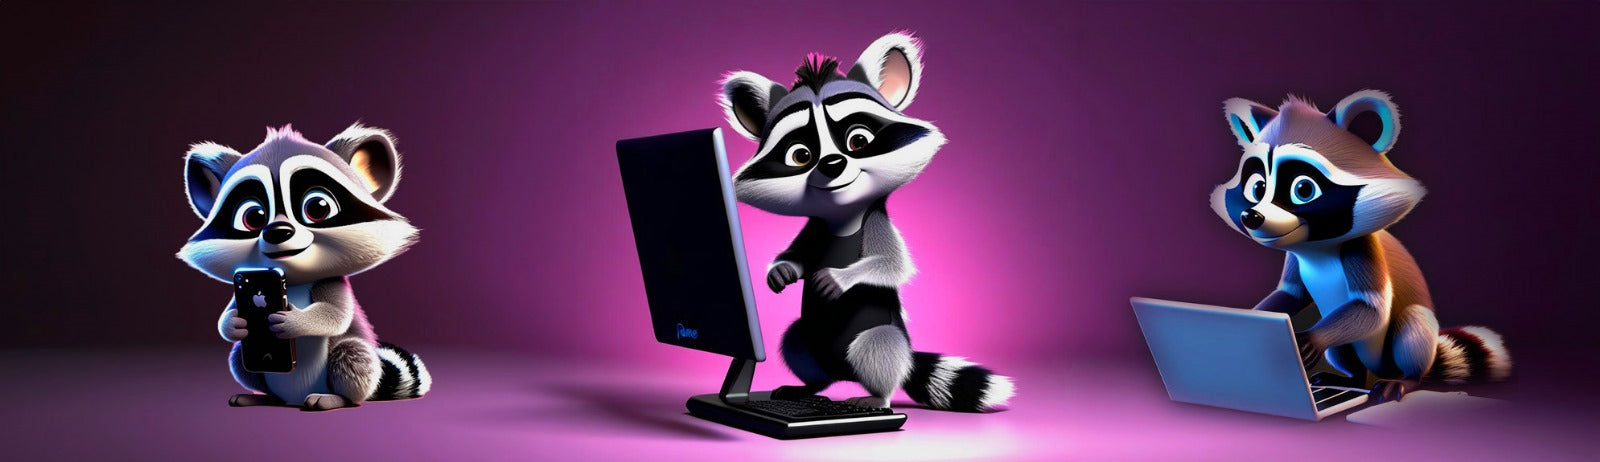 A detailed digital illustration of raccoons in their natural digital habitat.